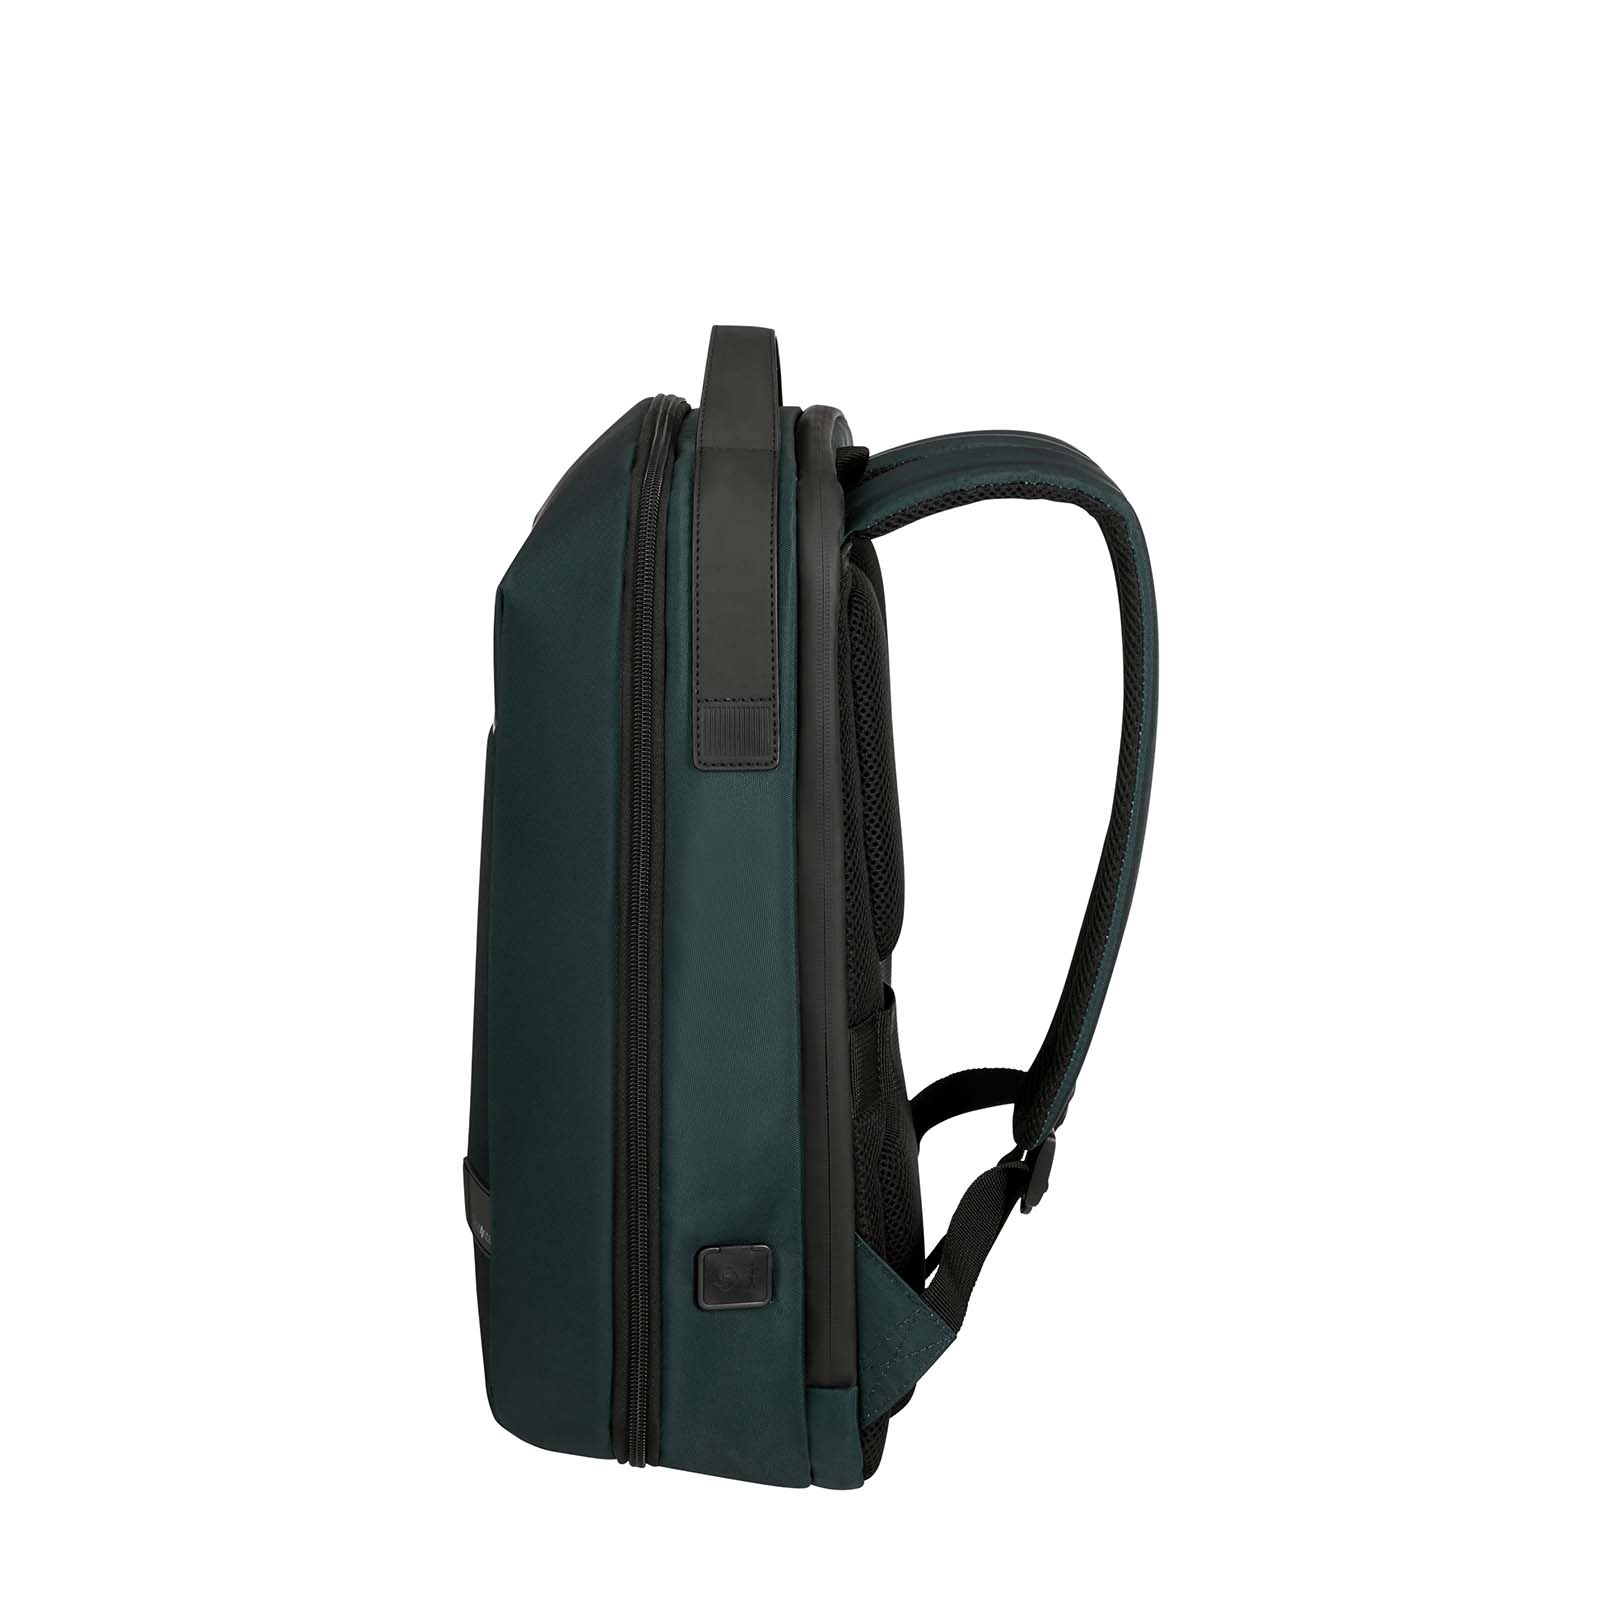 Samsonite-Litepoint-15-Inch-Laptop-Backpack-Urban-Green-Side